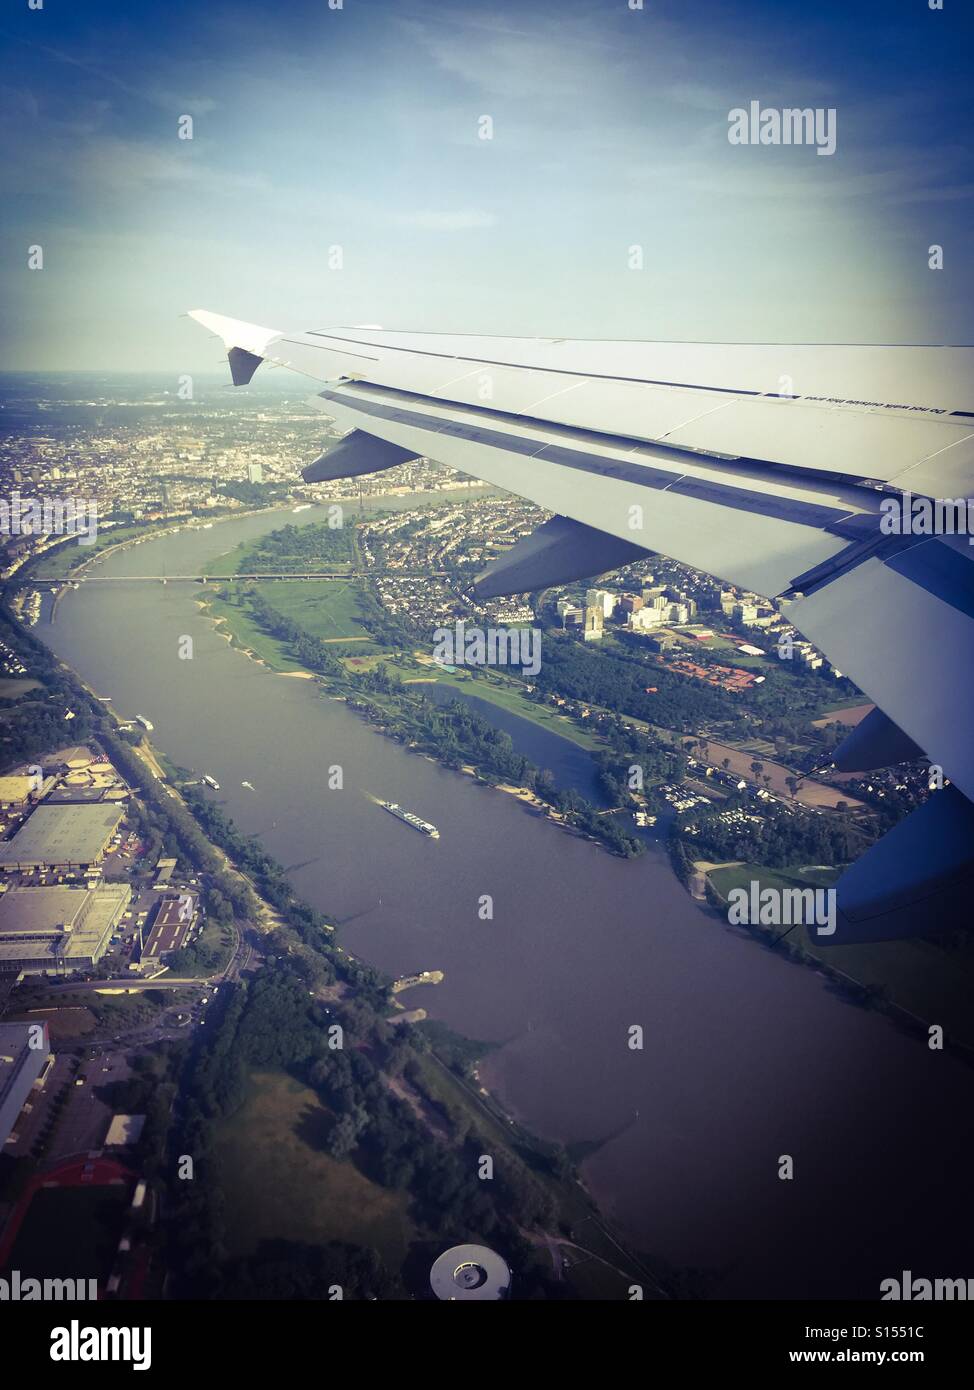 Rhein under the plane wing Stock Photo